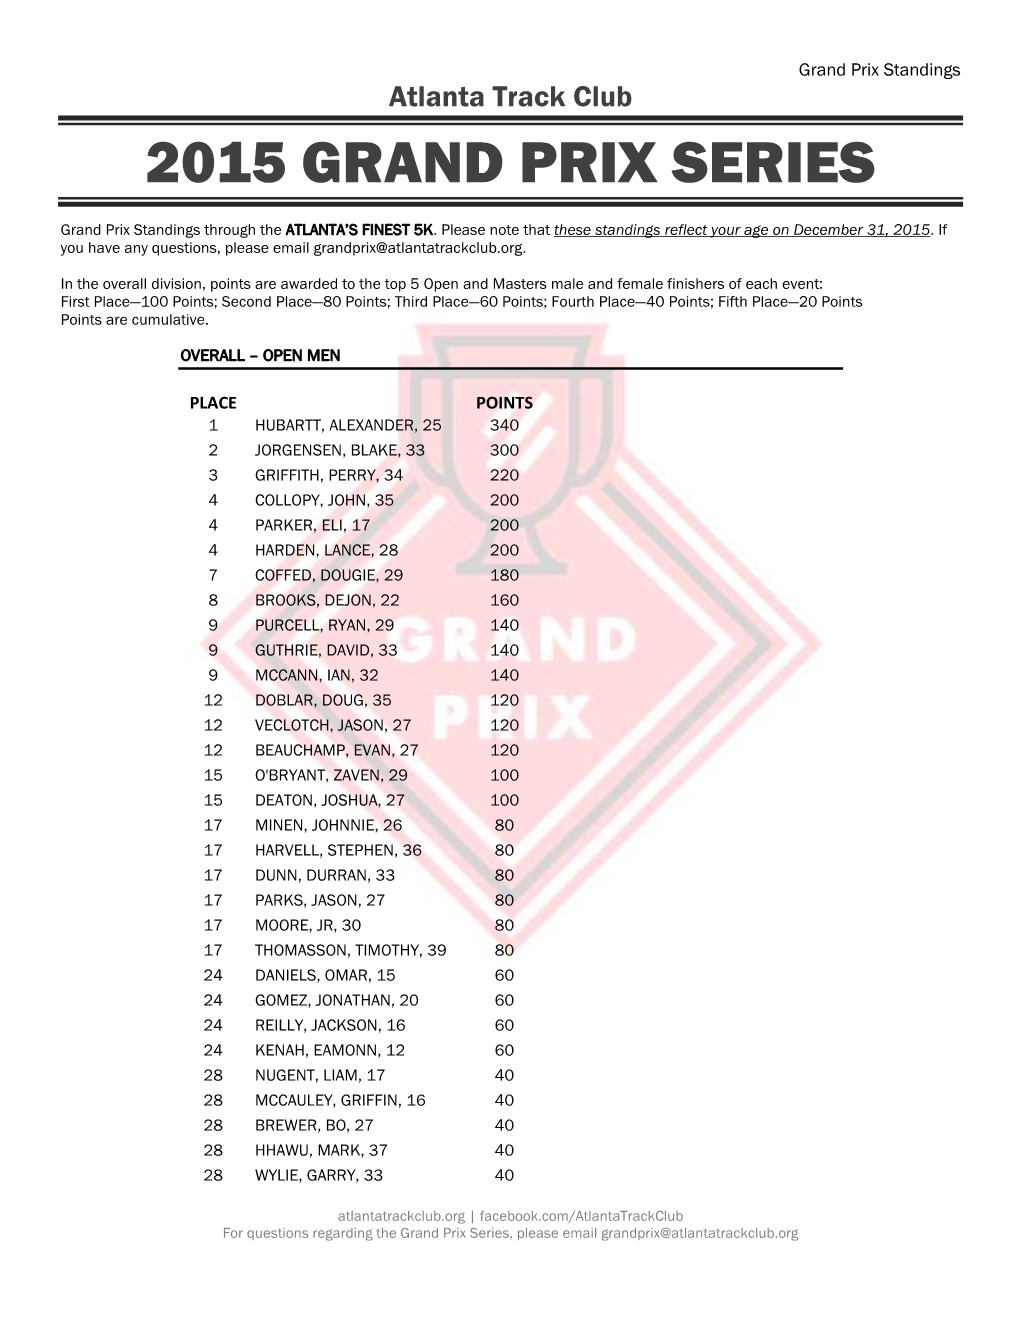 2015 Grand Prix Series